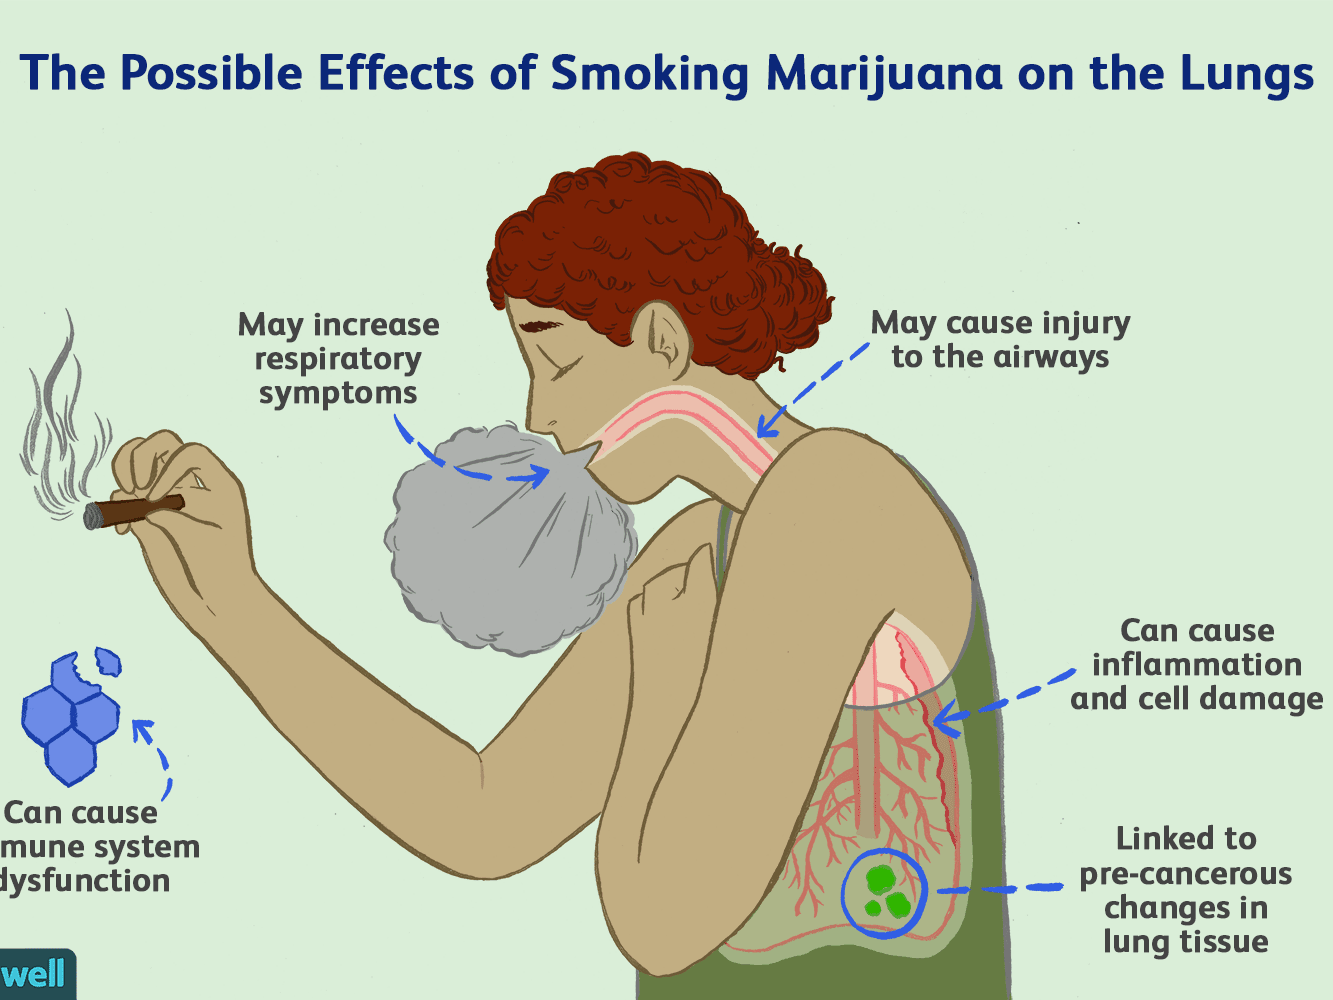 Does Smoking Marijuana Cause Lung Cancer?